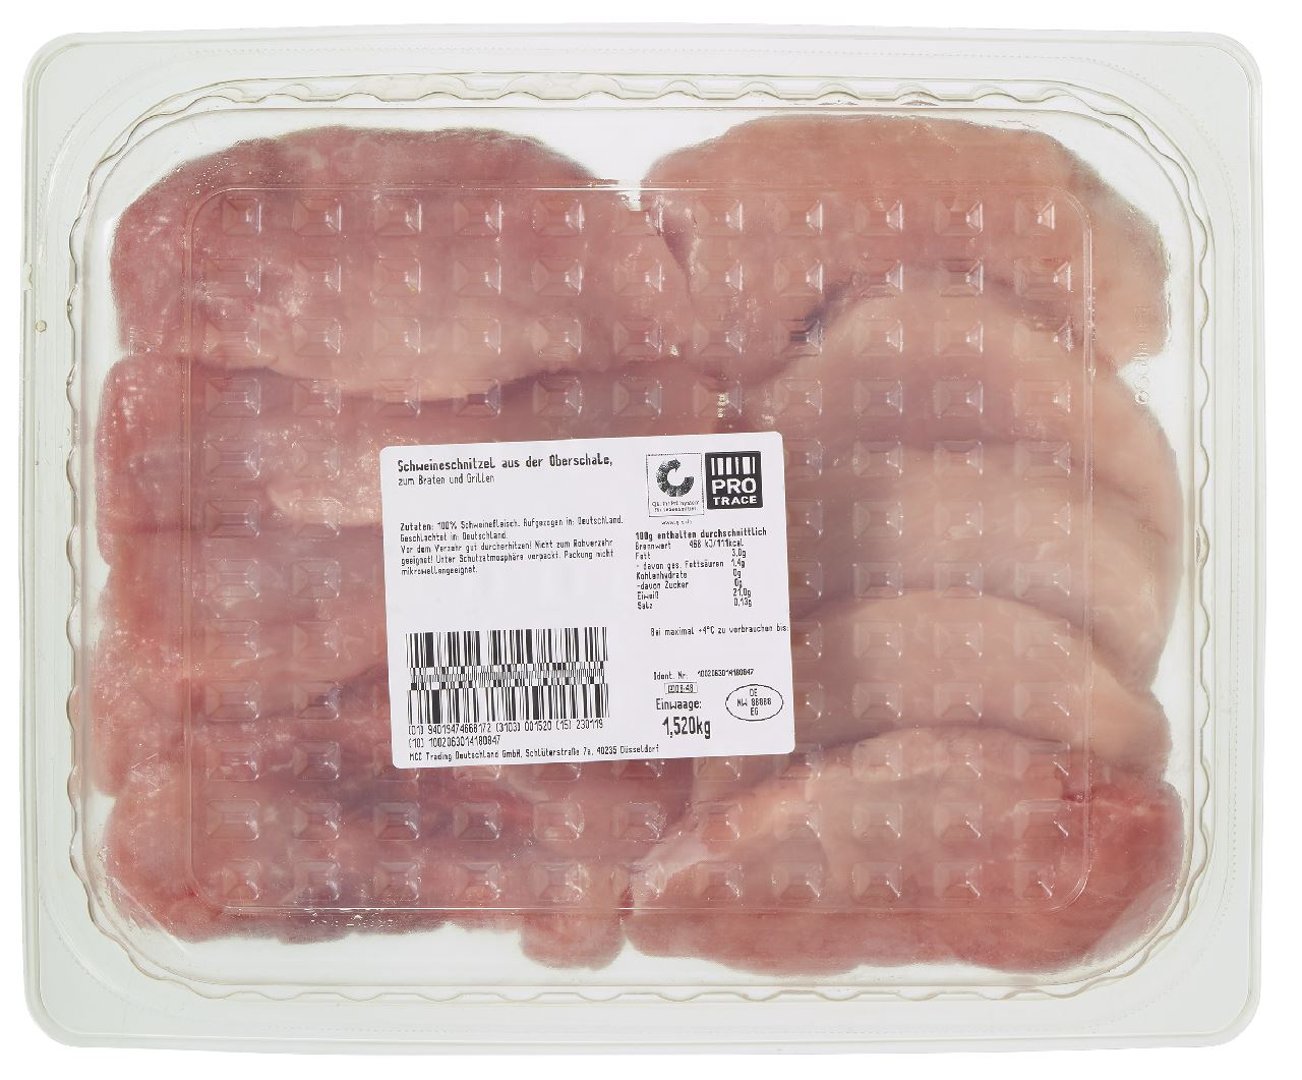 METRO Chef - QS Schweineschnitzel aus der Oberschale ca. 8 - 10 Stück, ca. 1,5 kg, Packung